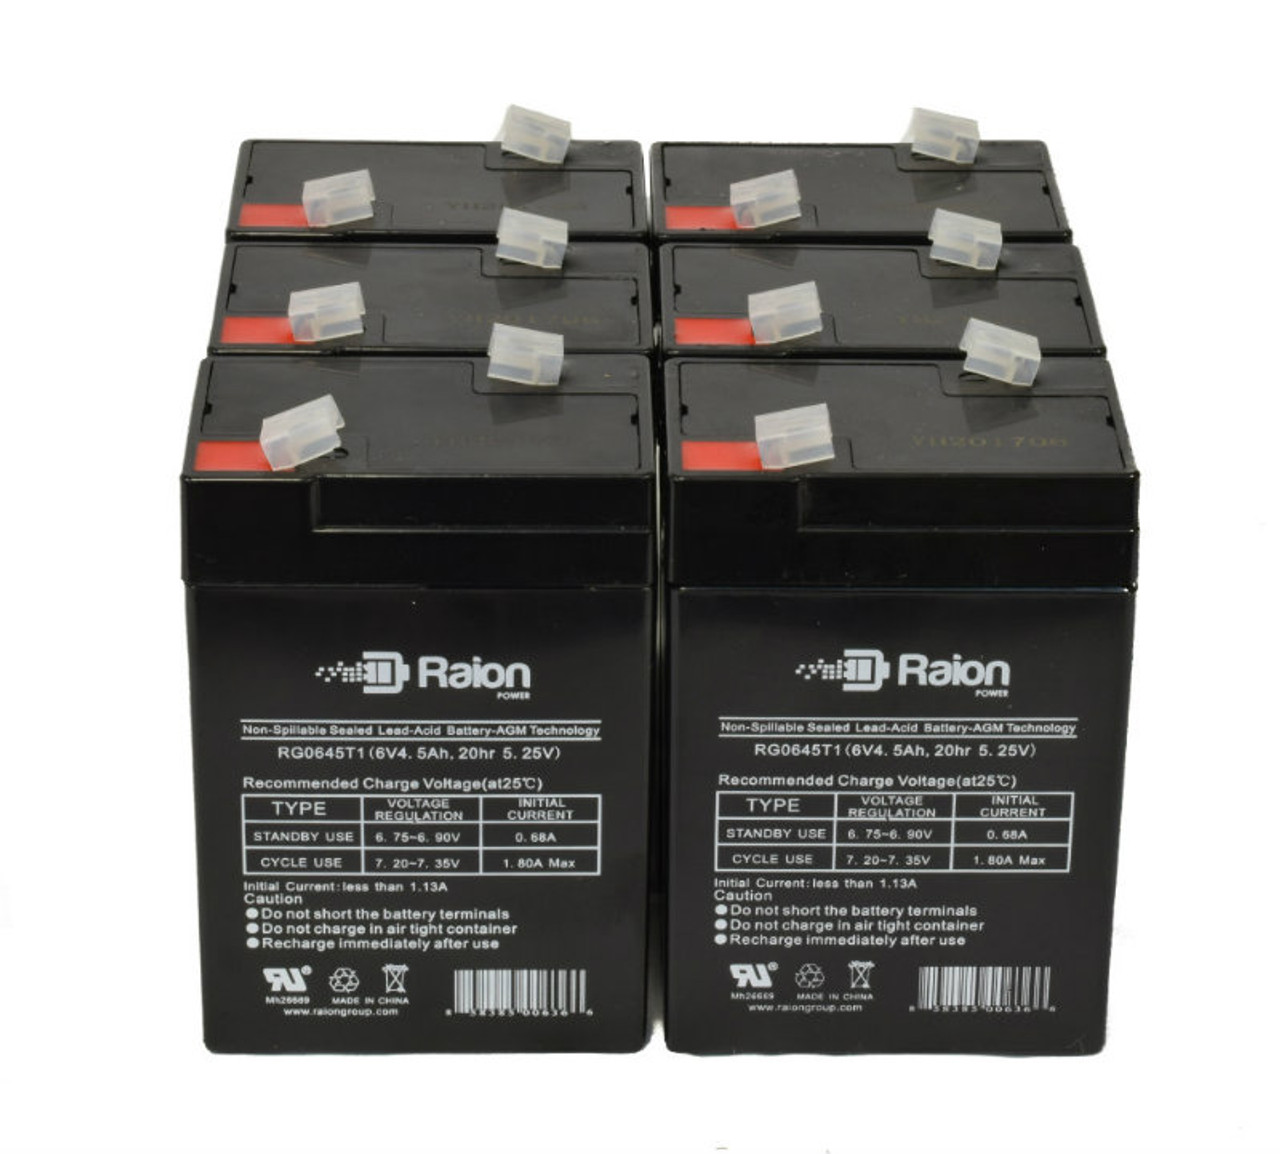 Raion Power 6 Volt 4.5Ah RG0645T1 Replacement Battery for Voltmax VX-640 - 6 Pack